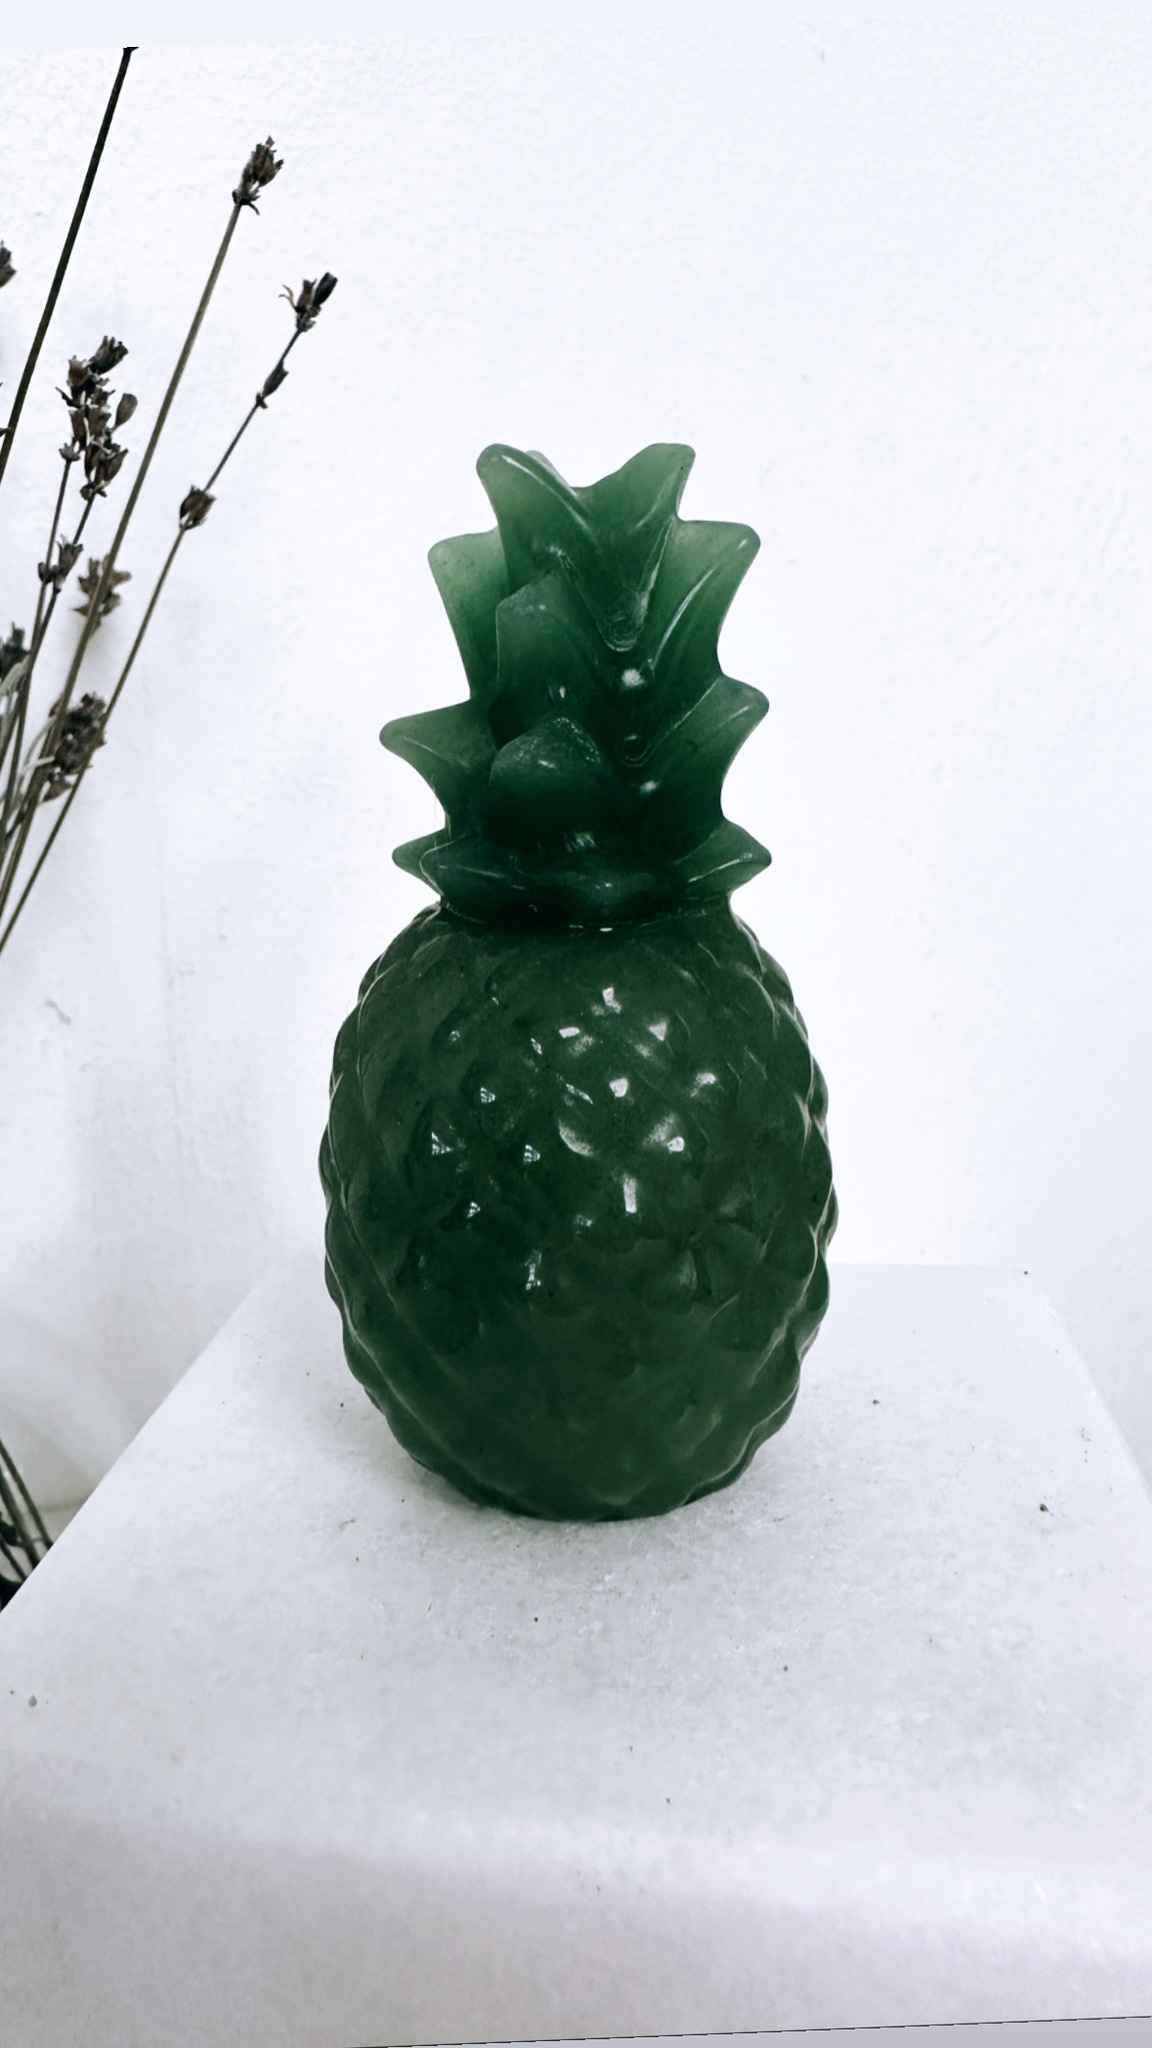 Grön Aventurin, ananas ( lite ljusare i tonen)